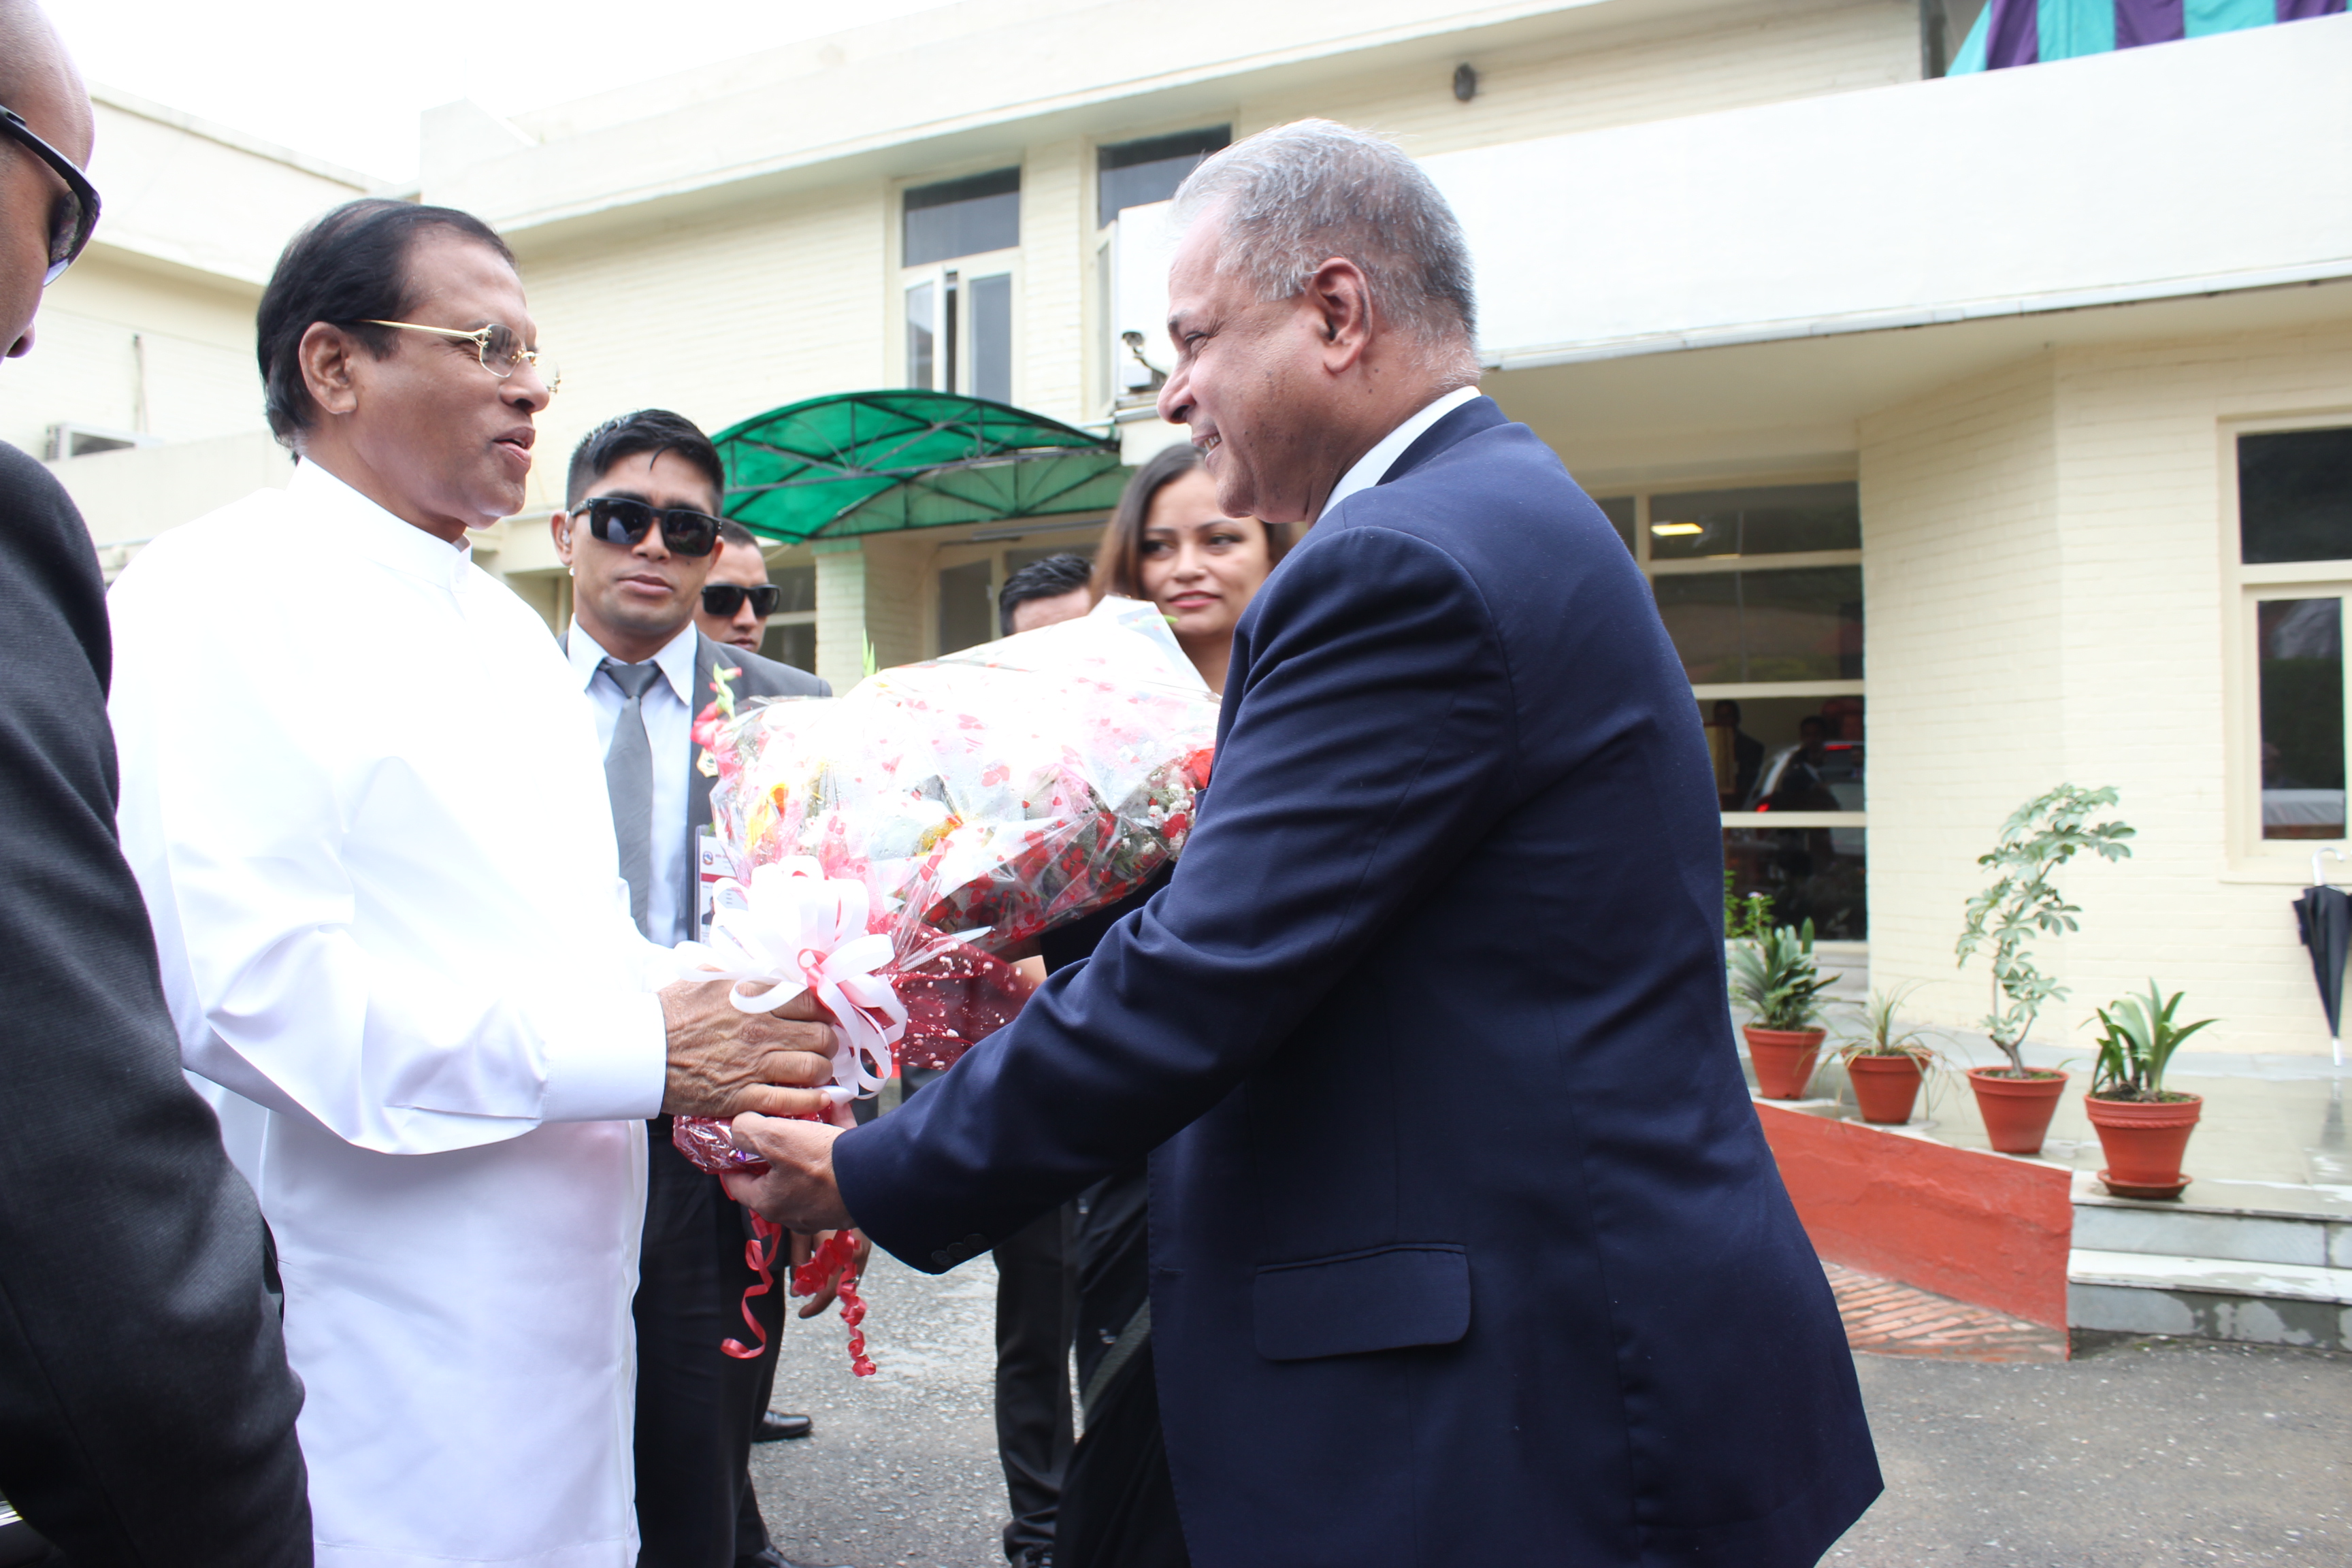 Press Release: H. E. Mr. Maithripala Sirisena, President of Sri Lanka, visited the SAARC Headquarters